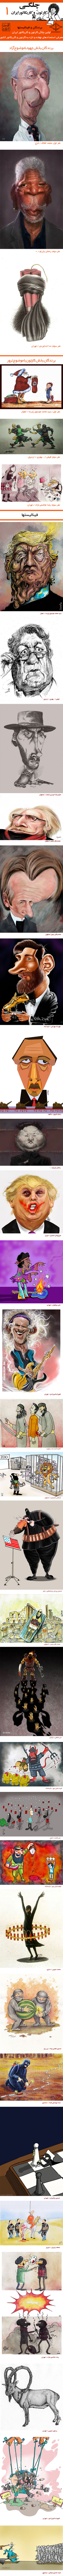 سایت طنز و کاریکاتور دکتر رحمت سخنی 